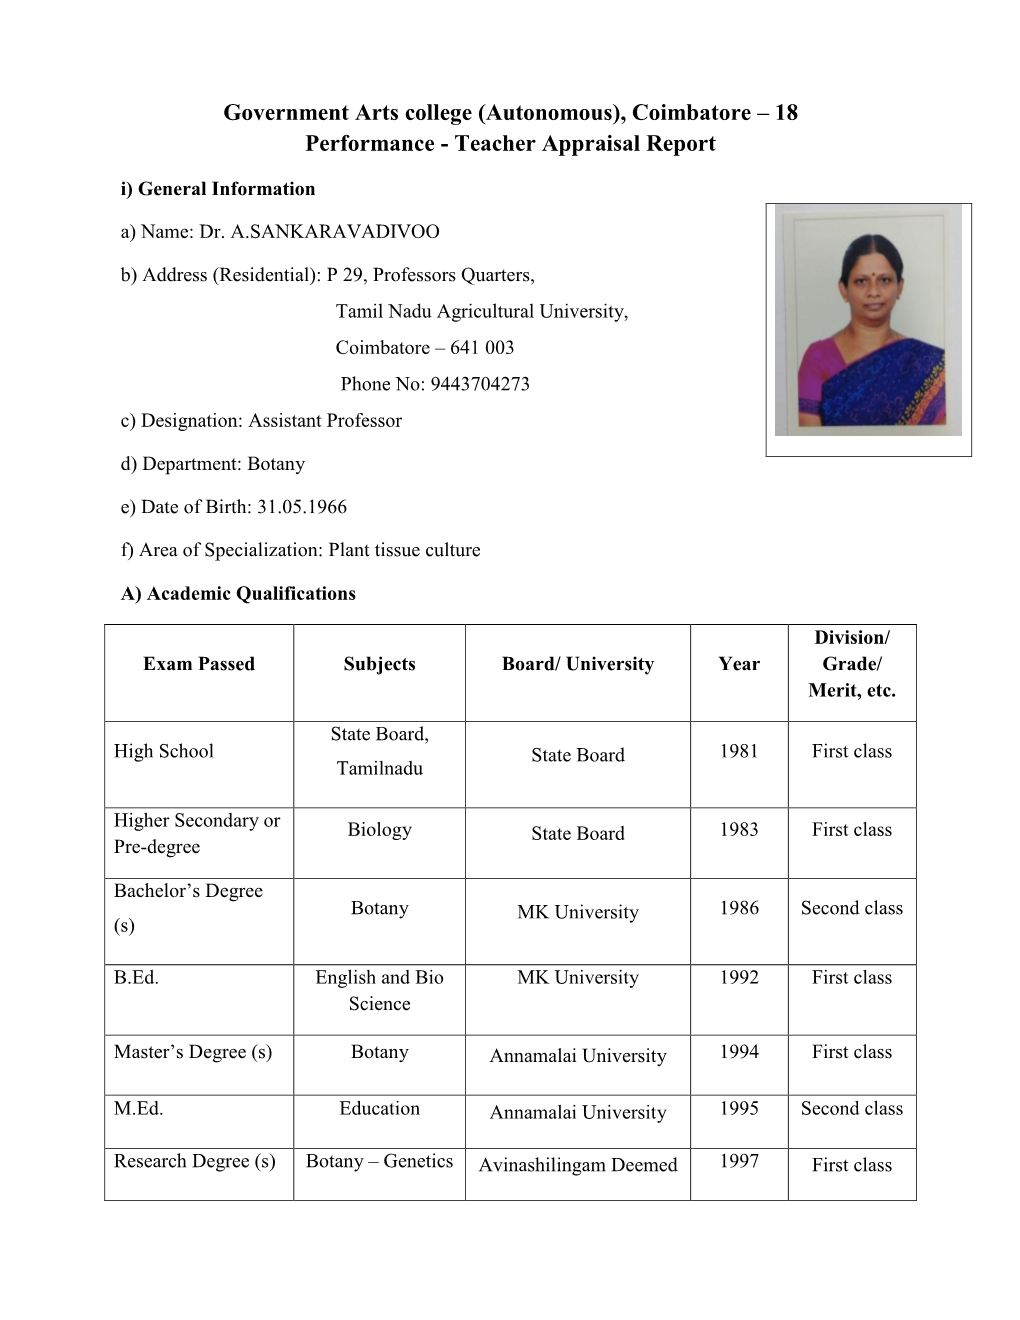 Government Arts College (Autonomous), Coimbatore – 18 Performance - Teacher Appraisal Report